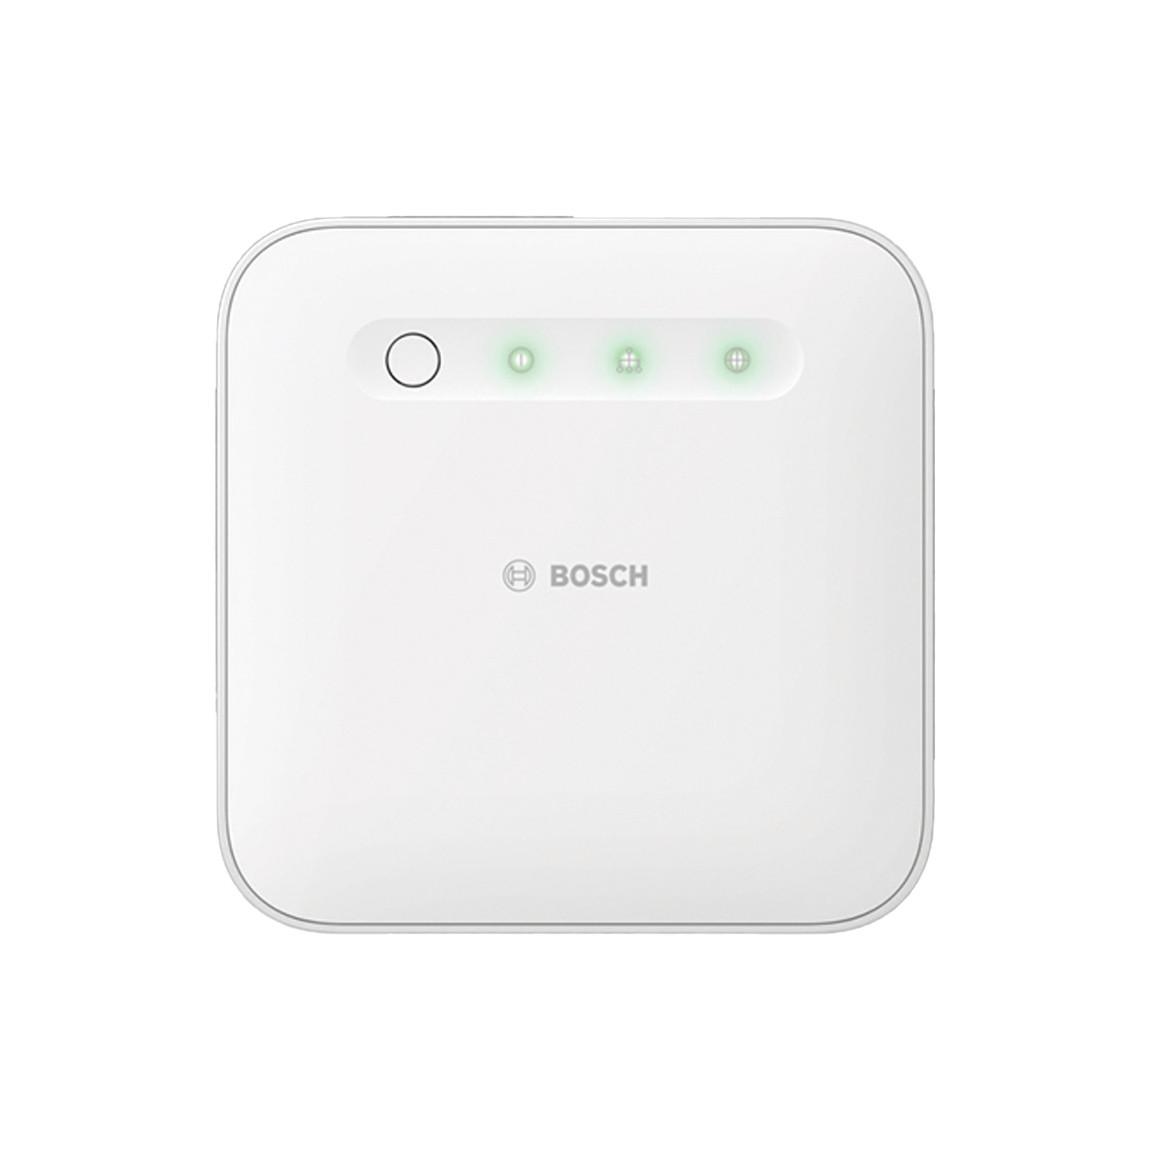 Bosch Smart Home - Starter Set Heizung II mit 8 Thermostaten_Controller frontal